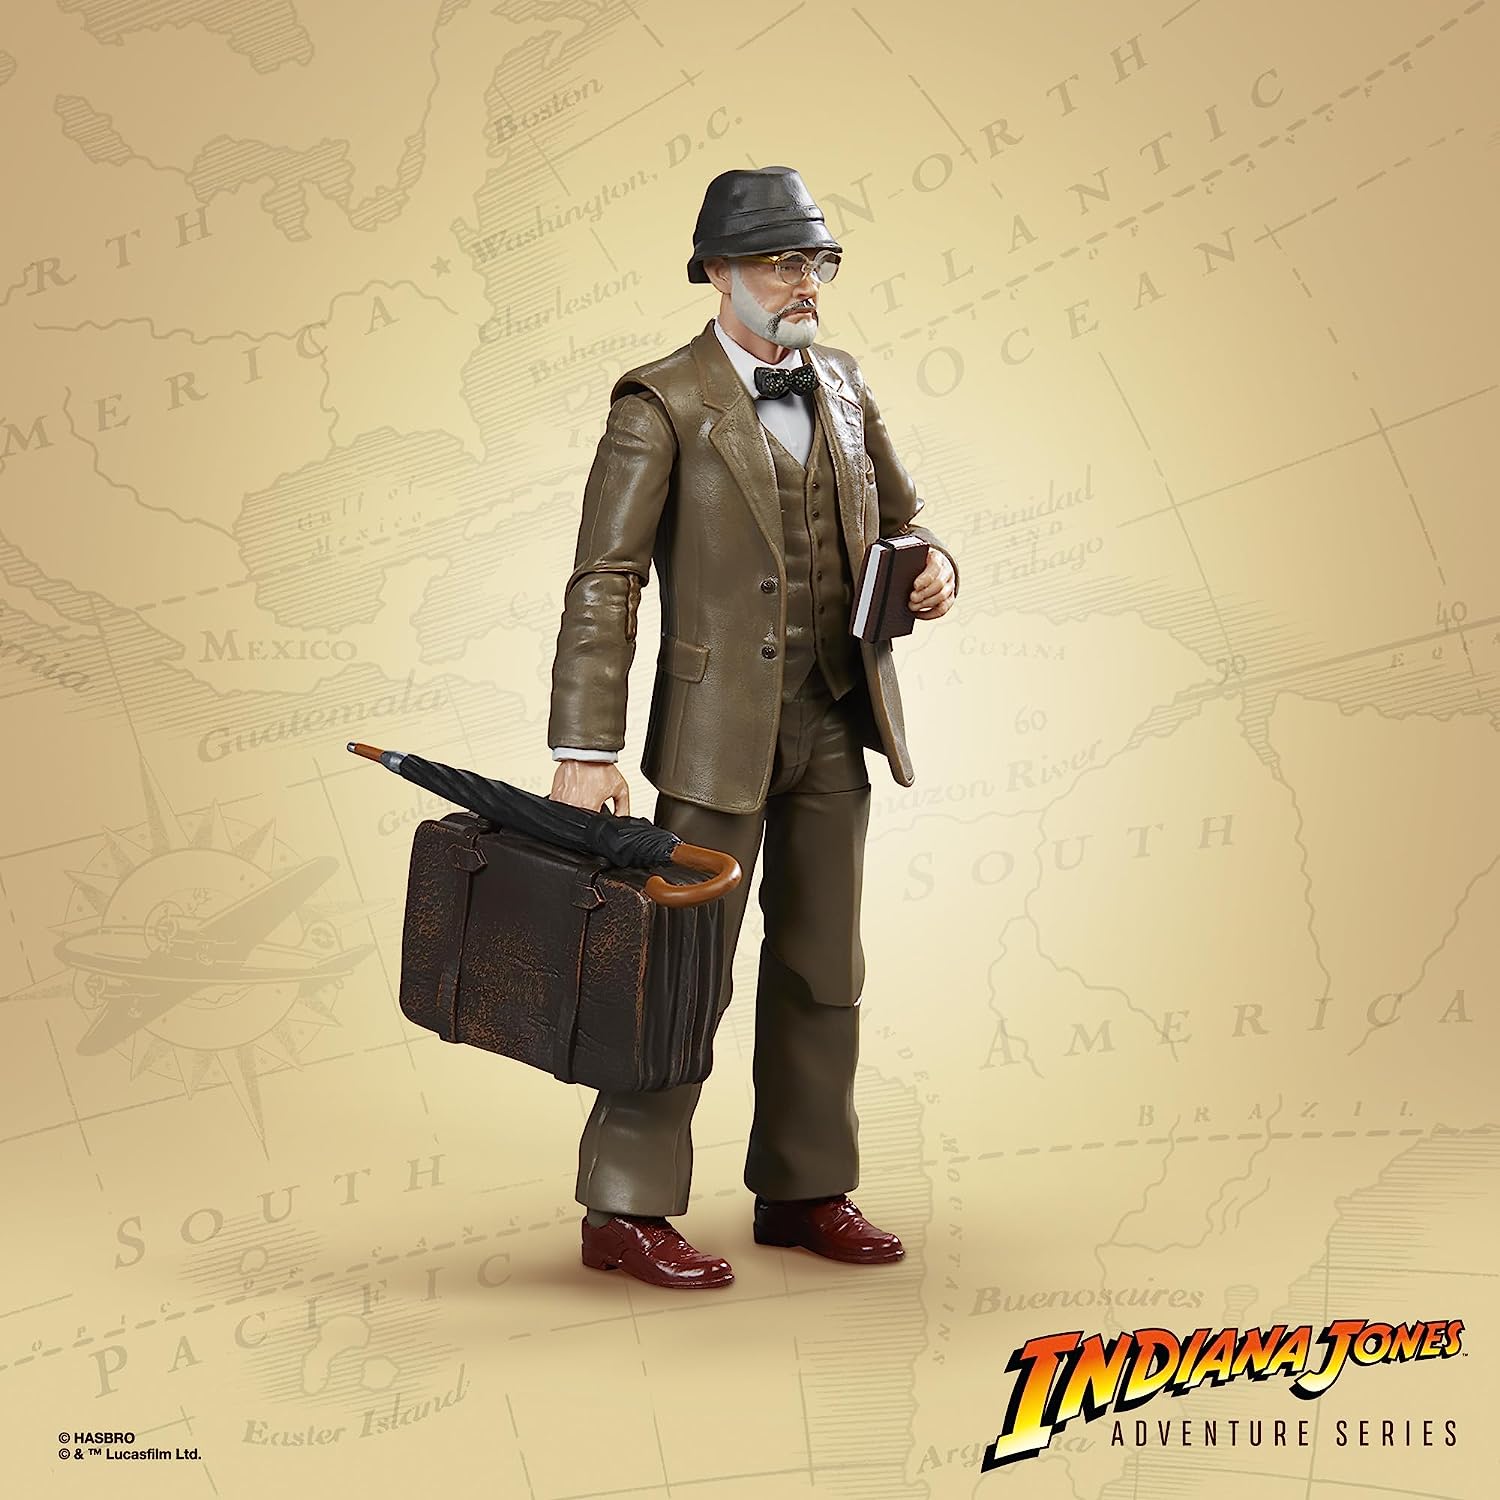 Indiana Jones Adventure Series Henry Jones (The Last Crusade) 6-Inch Action Figure 正規品画像